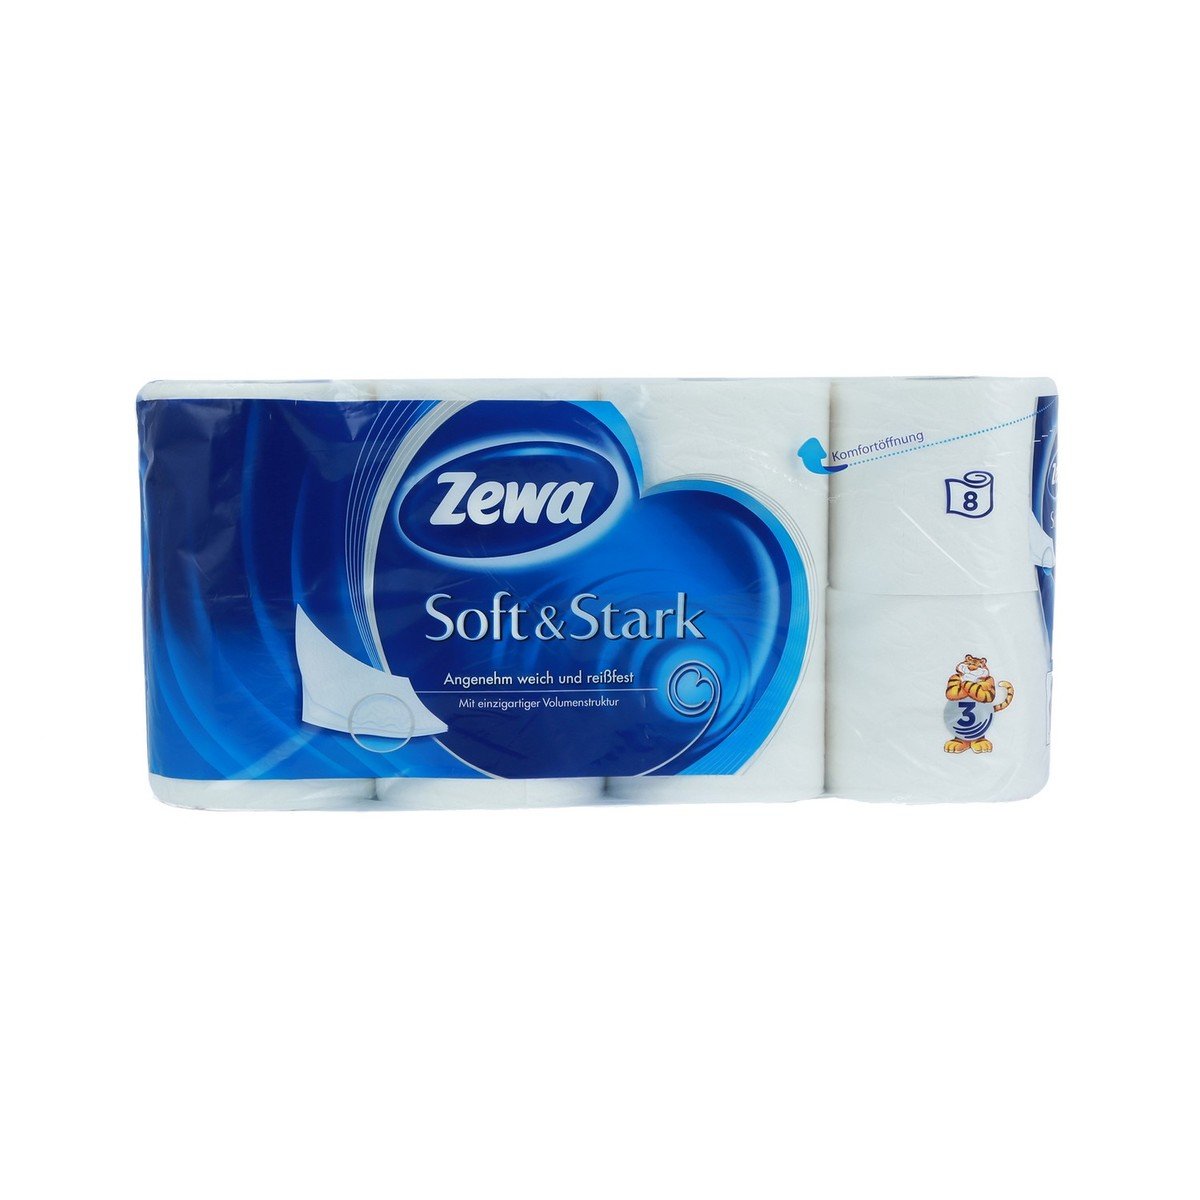 Zewa Soft & Stark Toilet Roll 8pcs